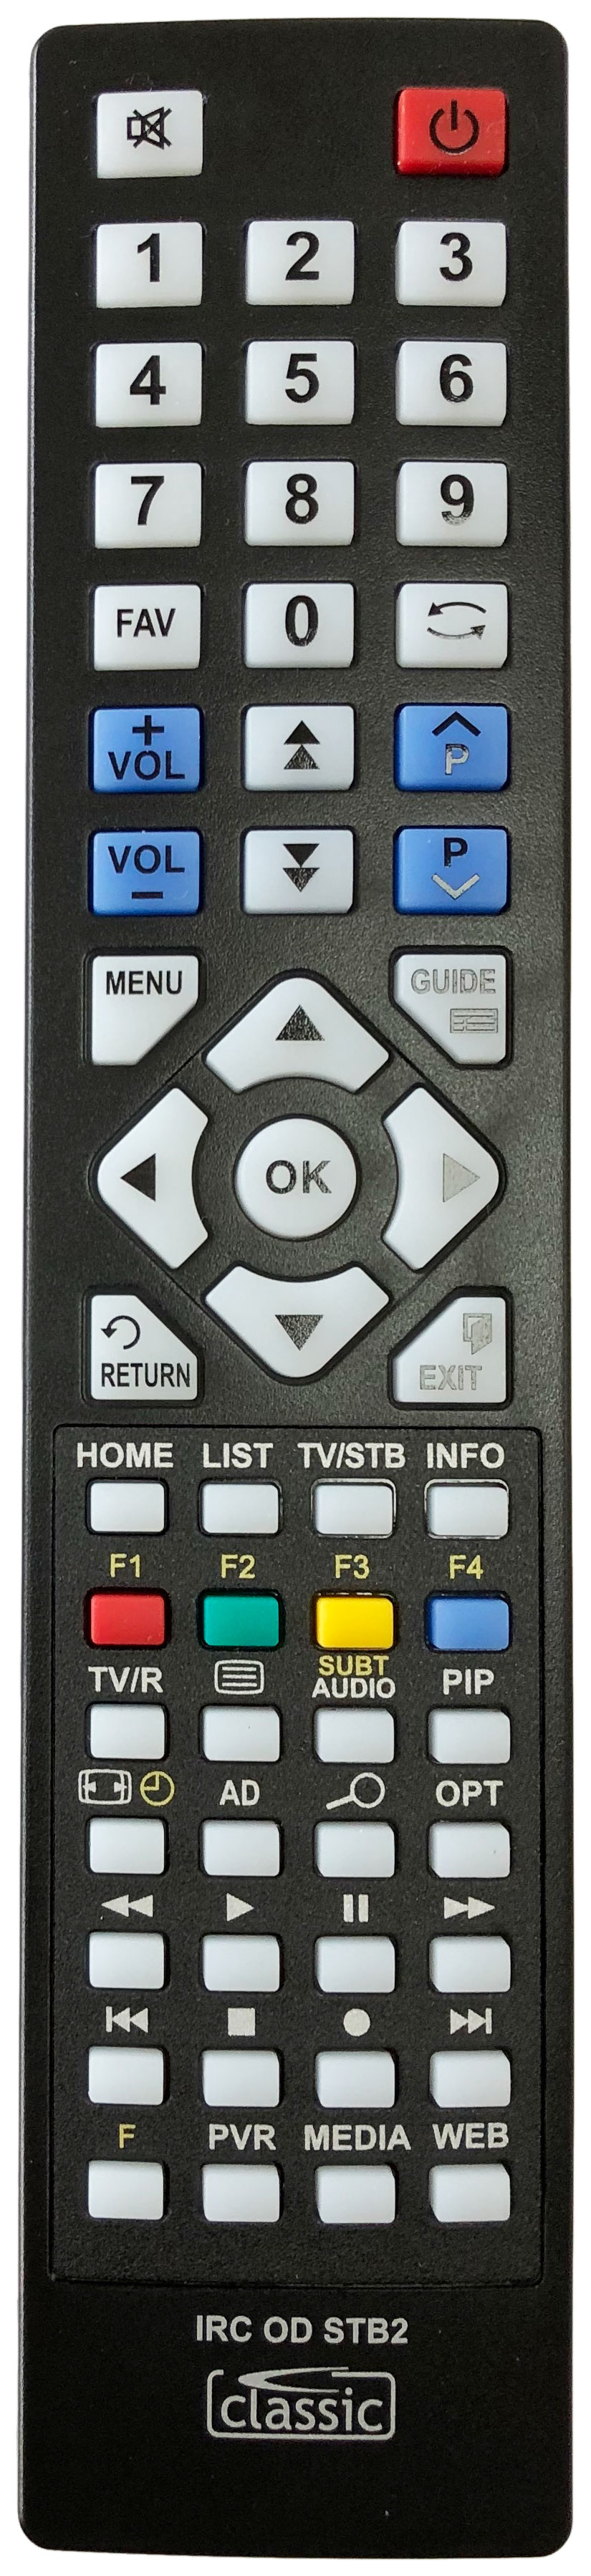 SAGEMCOM RT190-500 T2 Remote Control